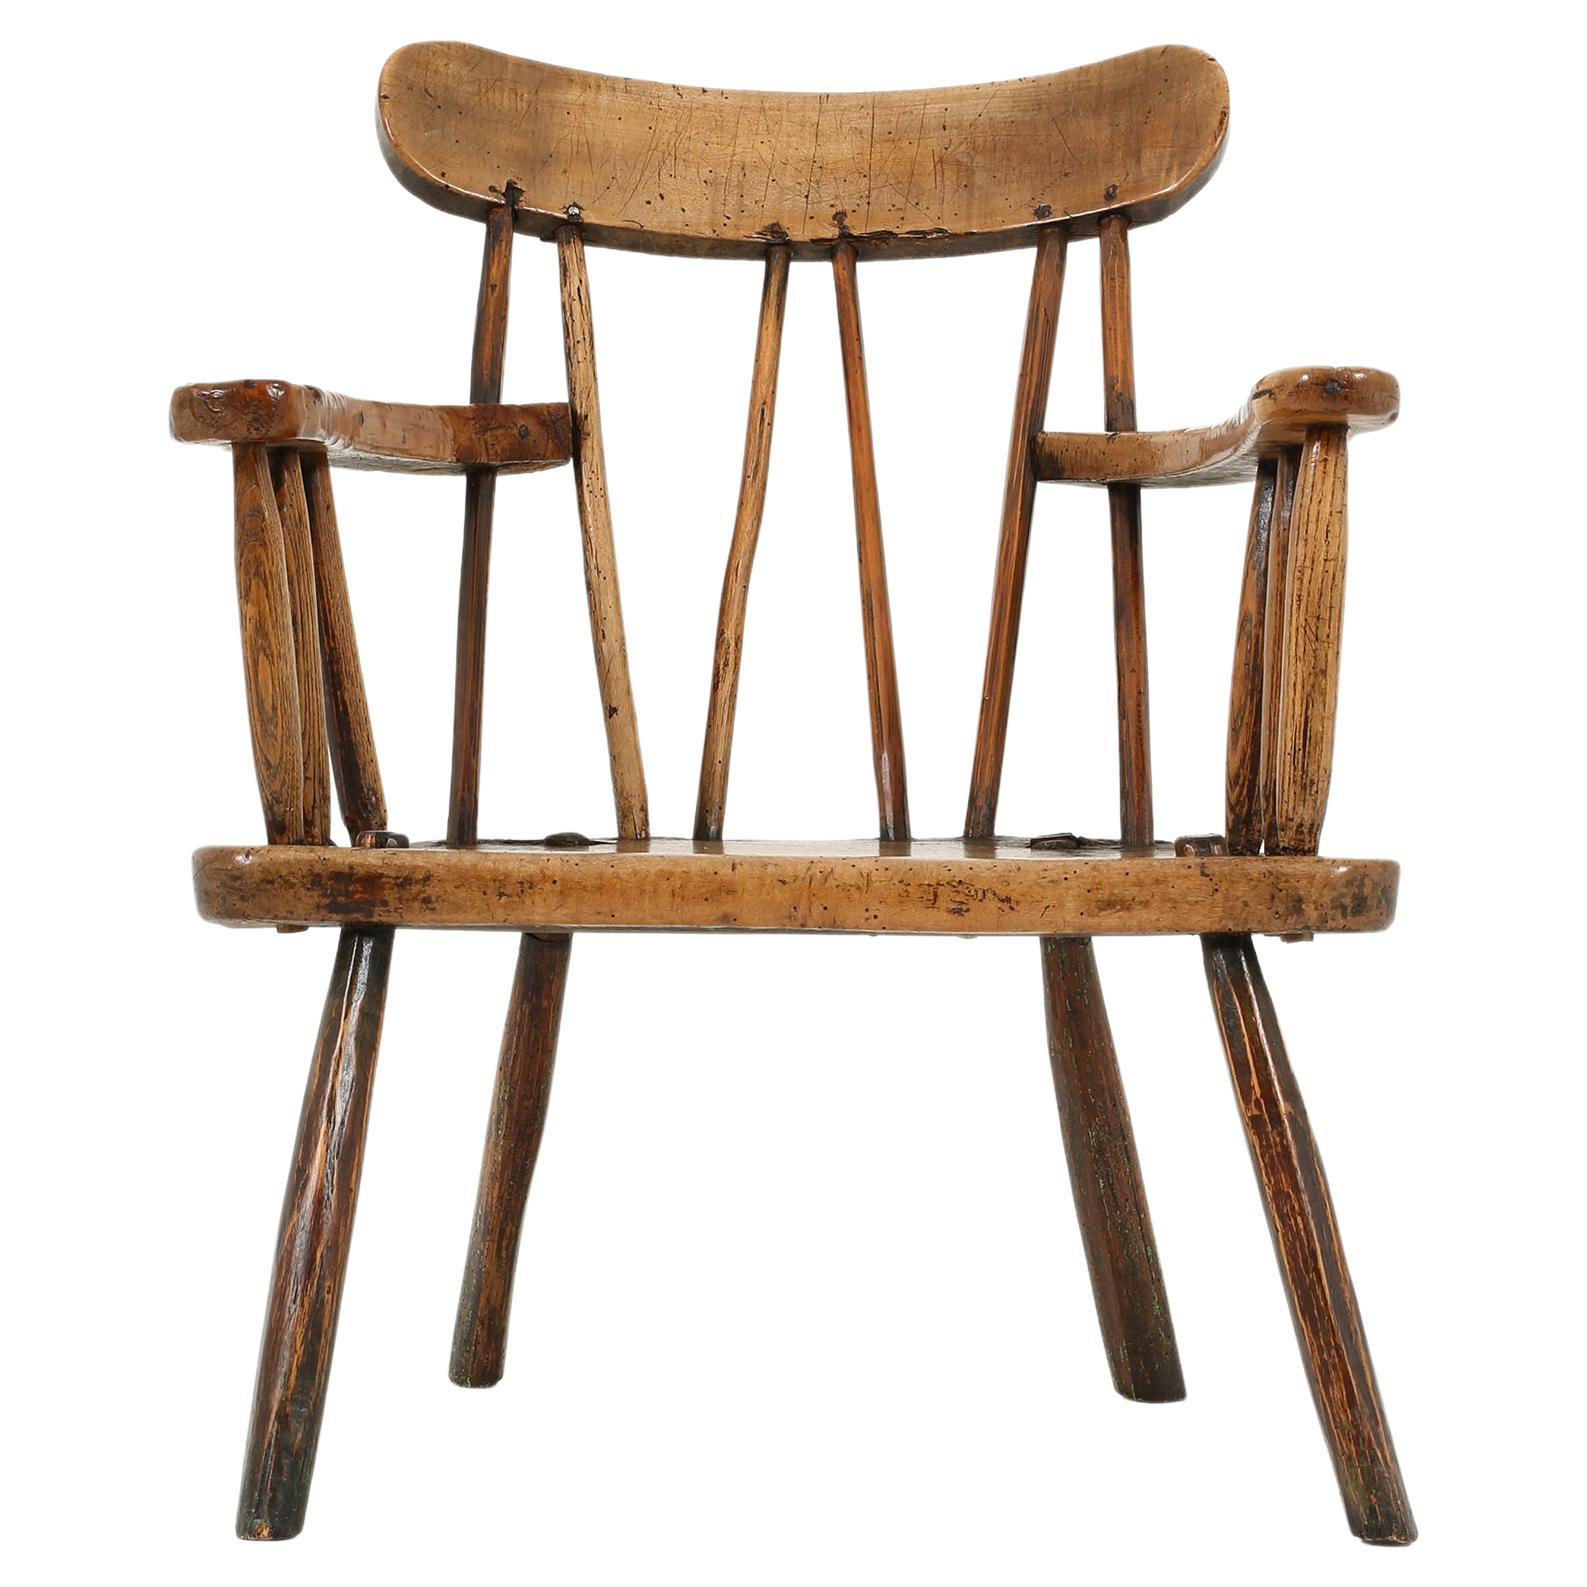 Primitive Irish 'Gibson' Chair